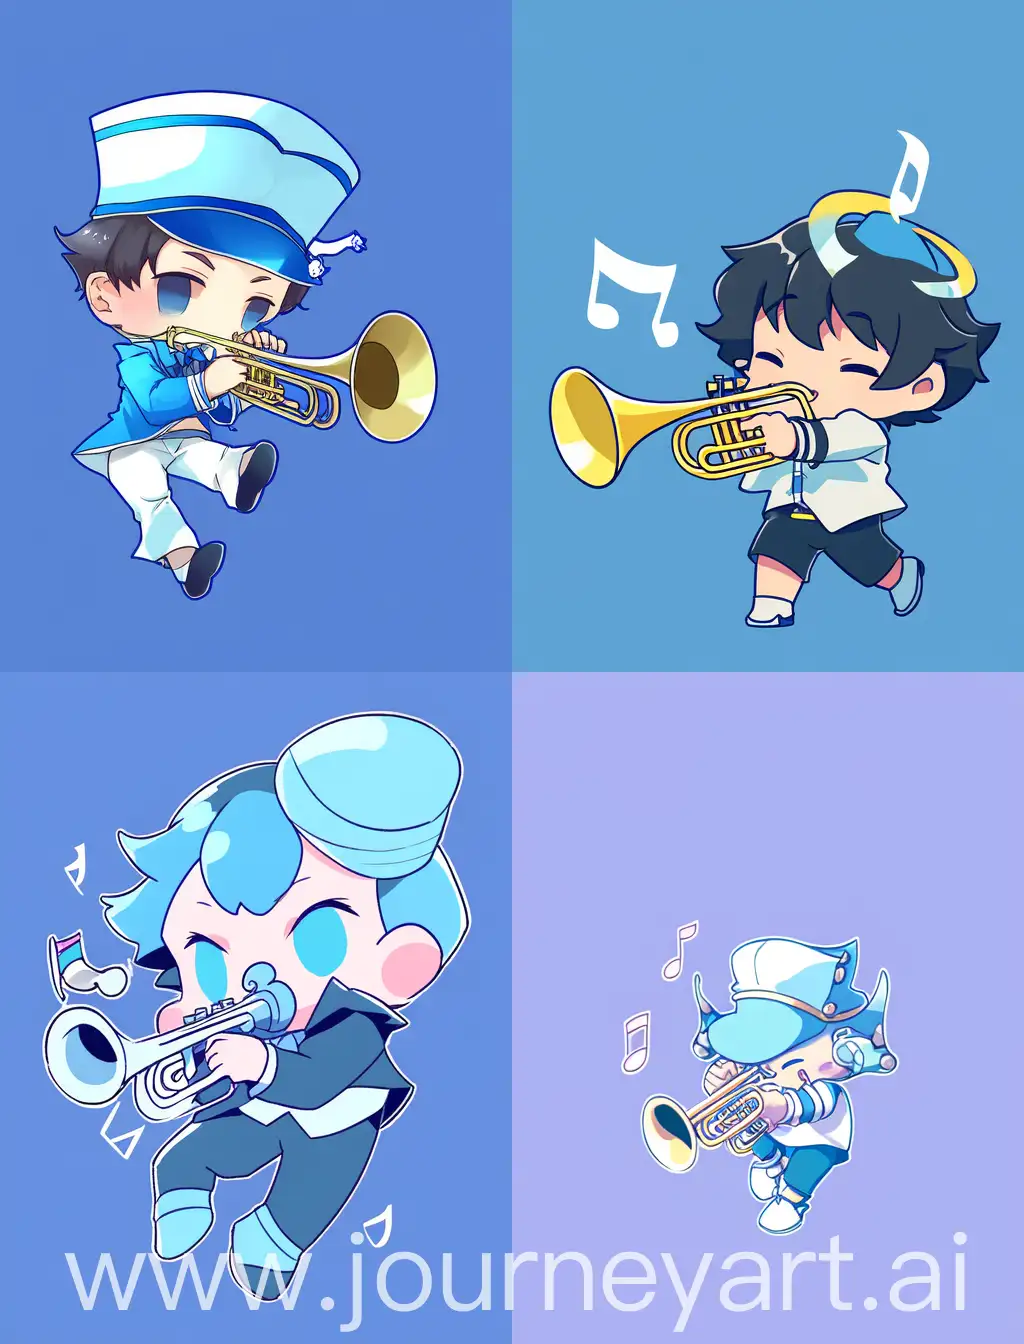 Chibi-Anime-Guy-Playing-Trumpet-on-Vibrant-Blue-Background